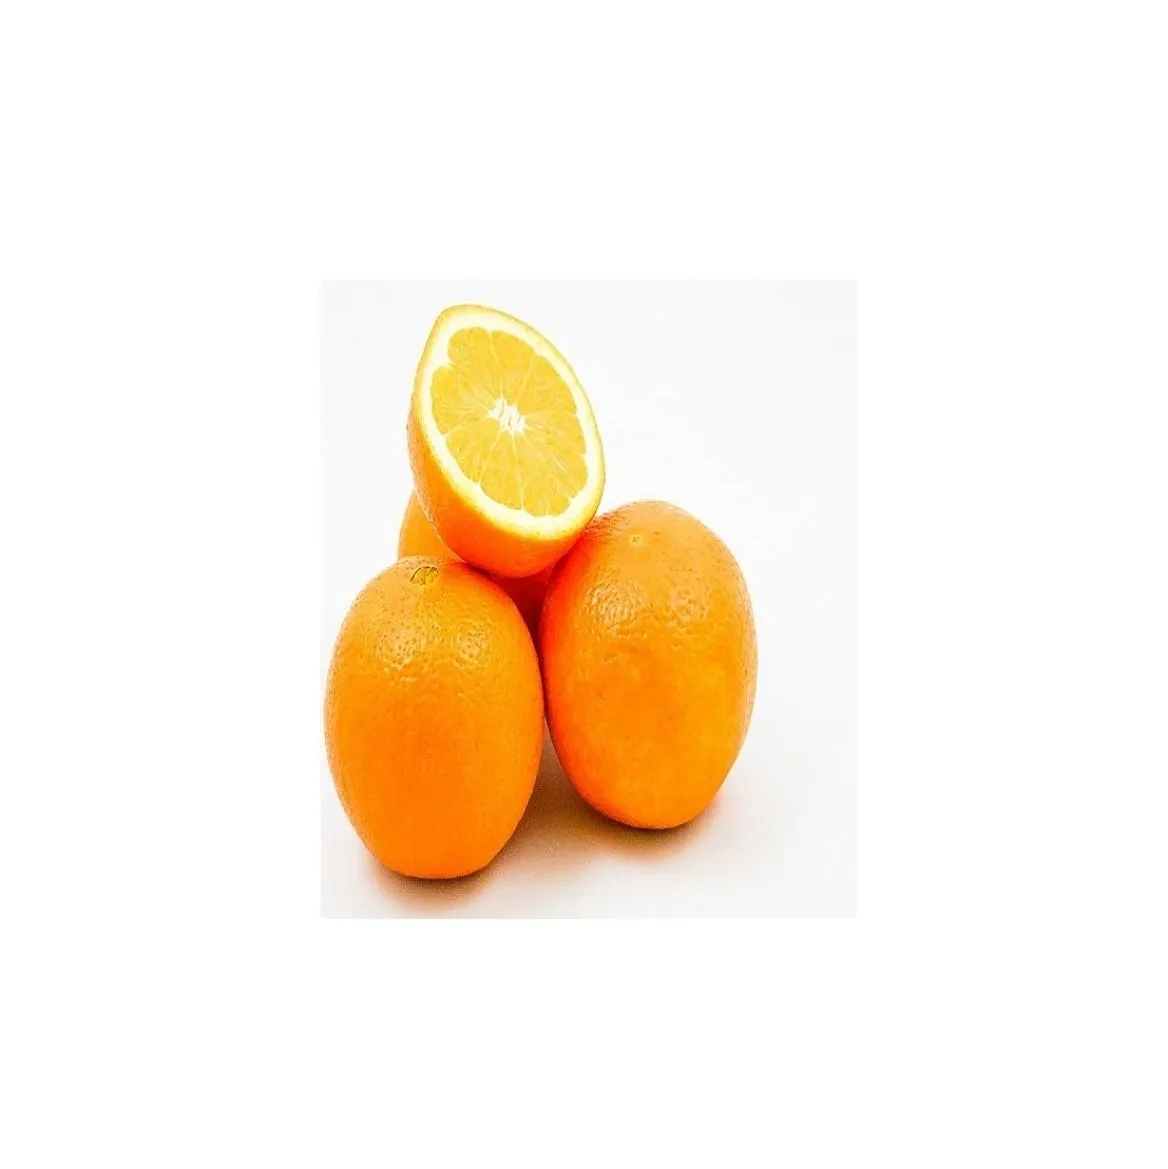 tangerine fruit vs mandarin + purchase price, use, uses and properties